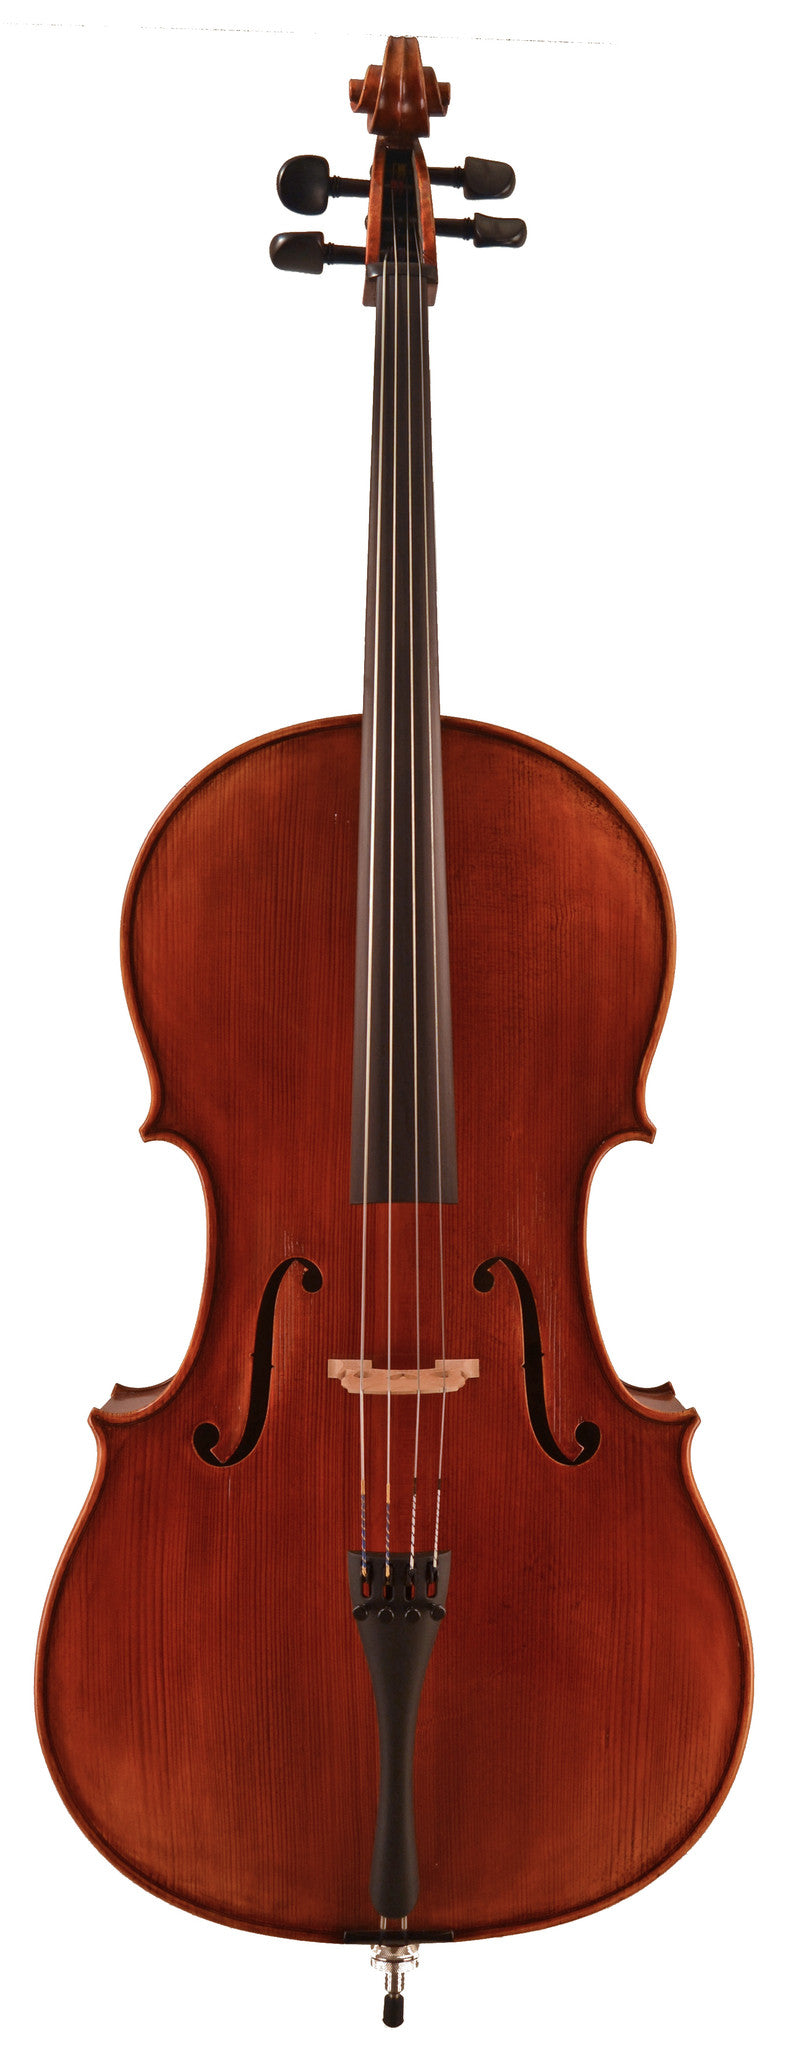 StringWorks Maestro Cello